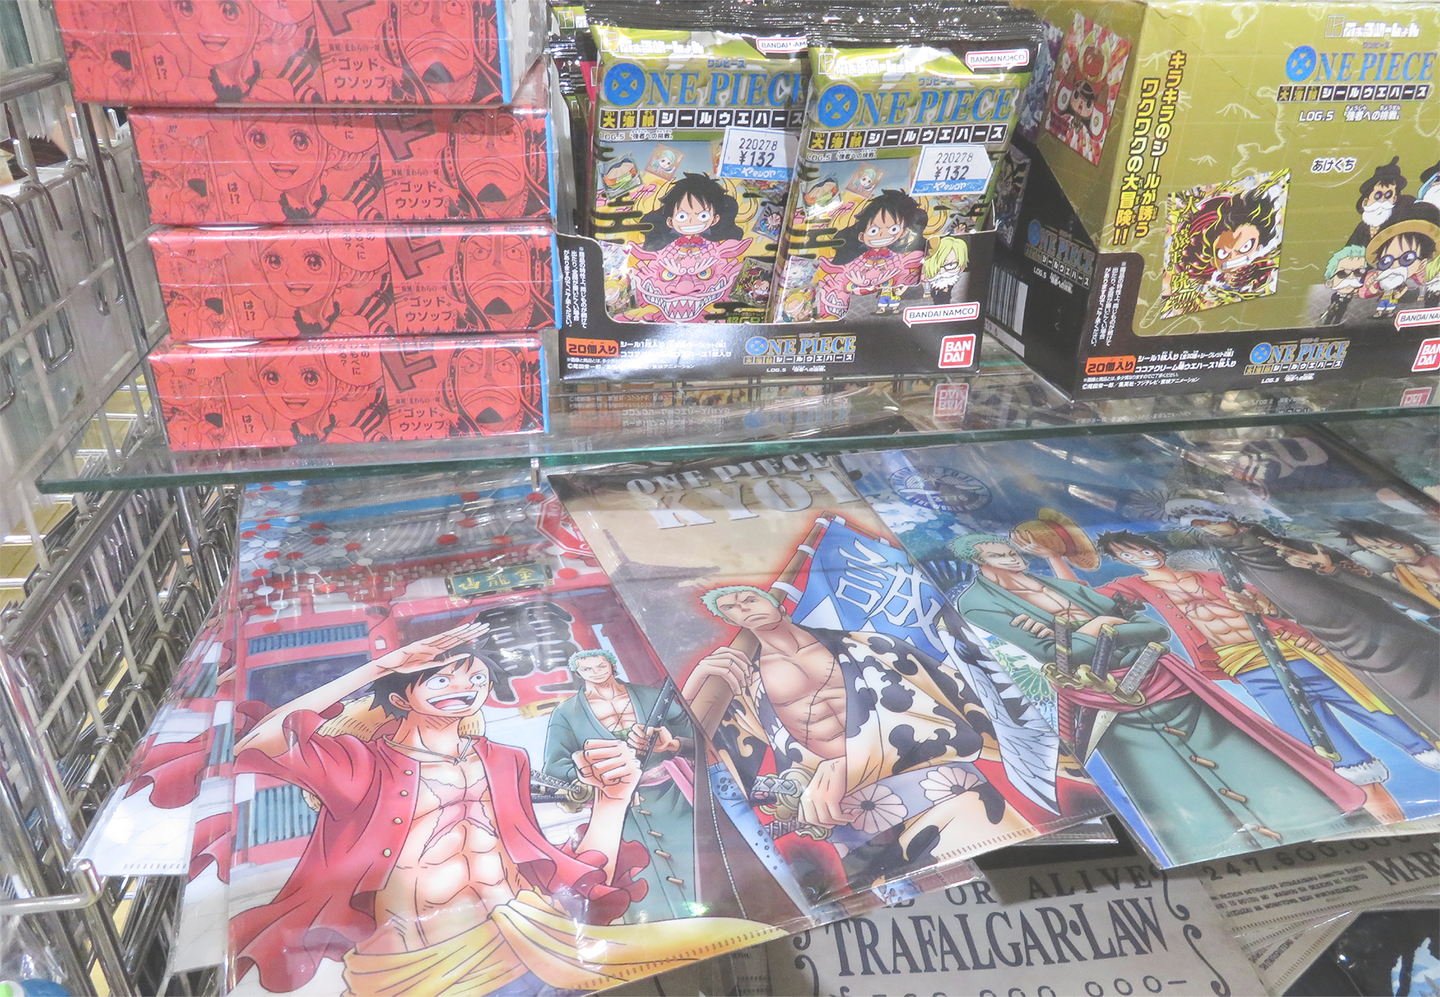 Images of ONE PIECE merchandise sold at YAMASHIROYA2